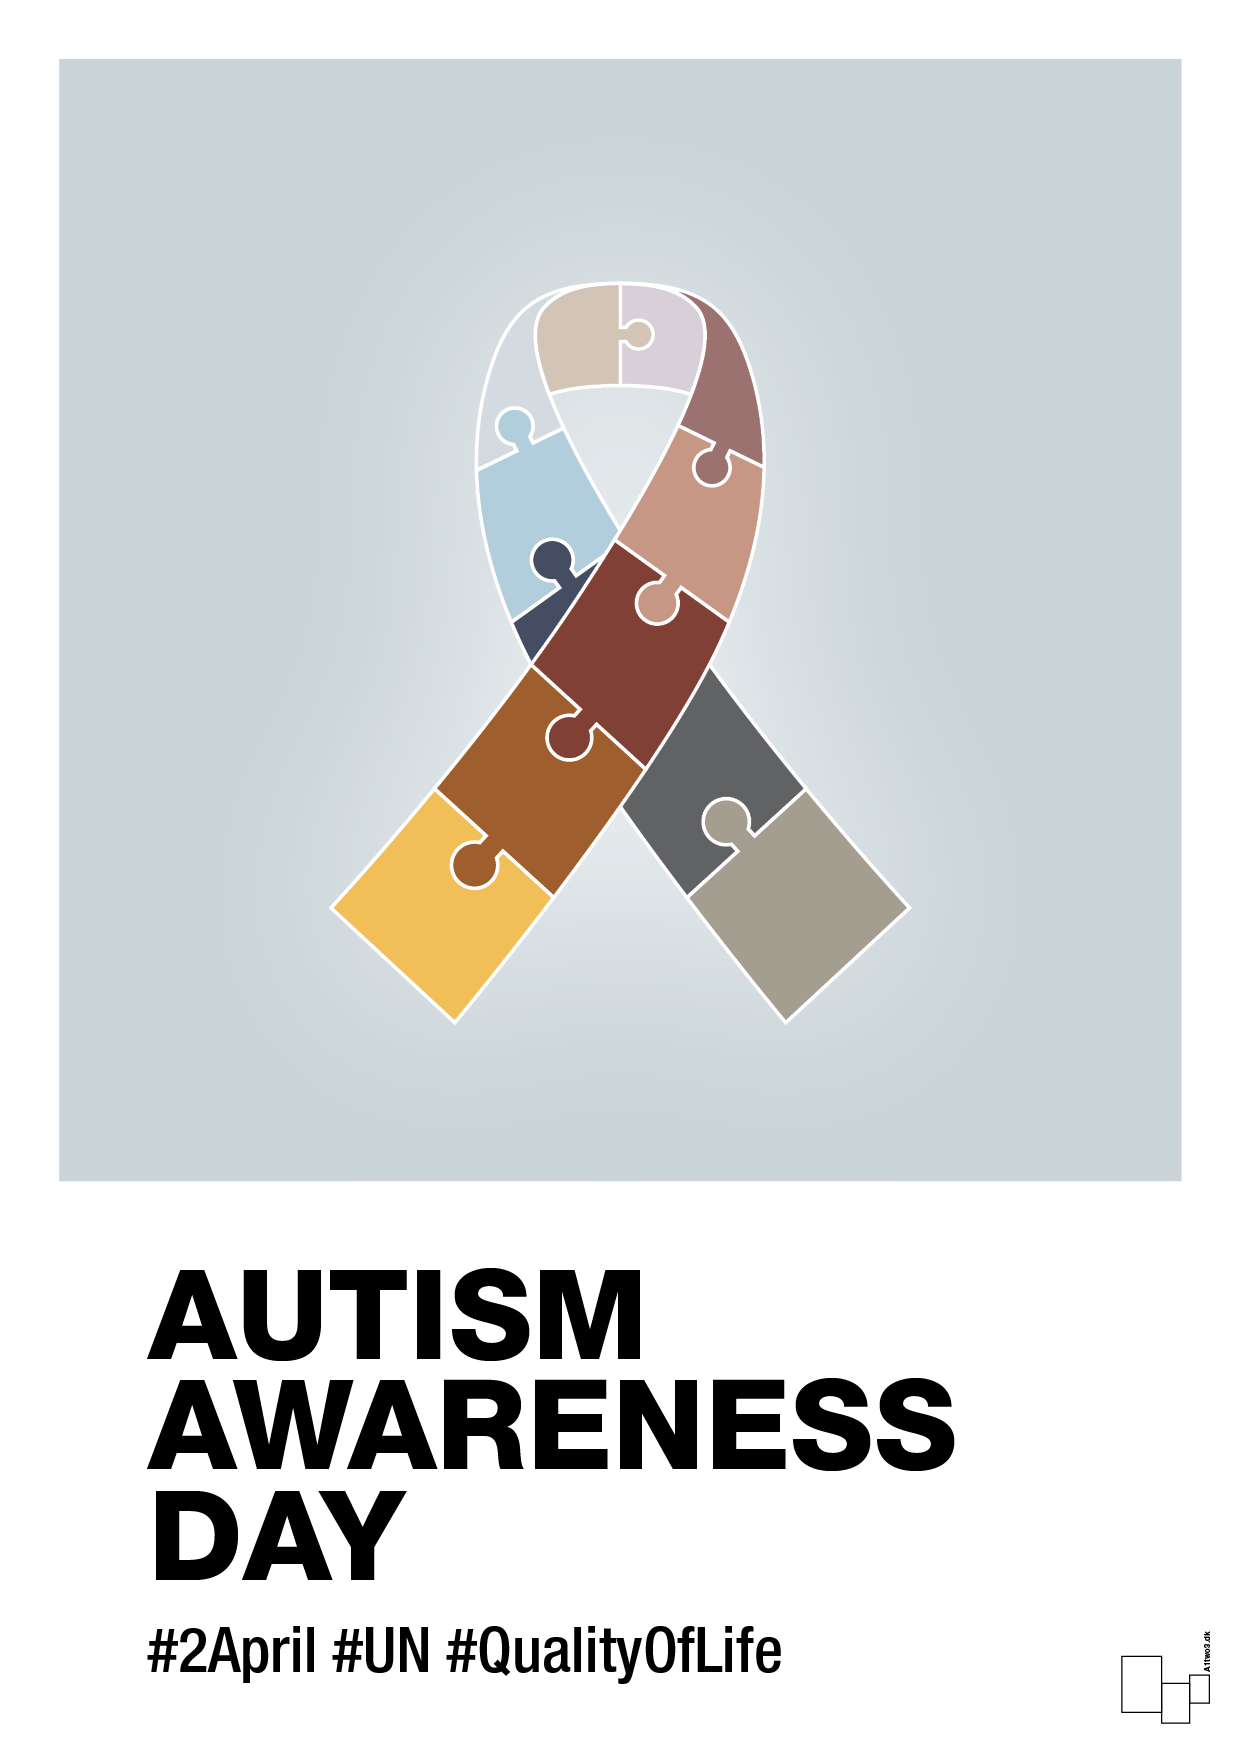 autism awareness day in fullcolor - Plakat med Samfund i Light Drizzle